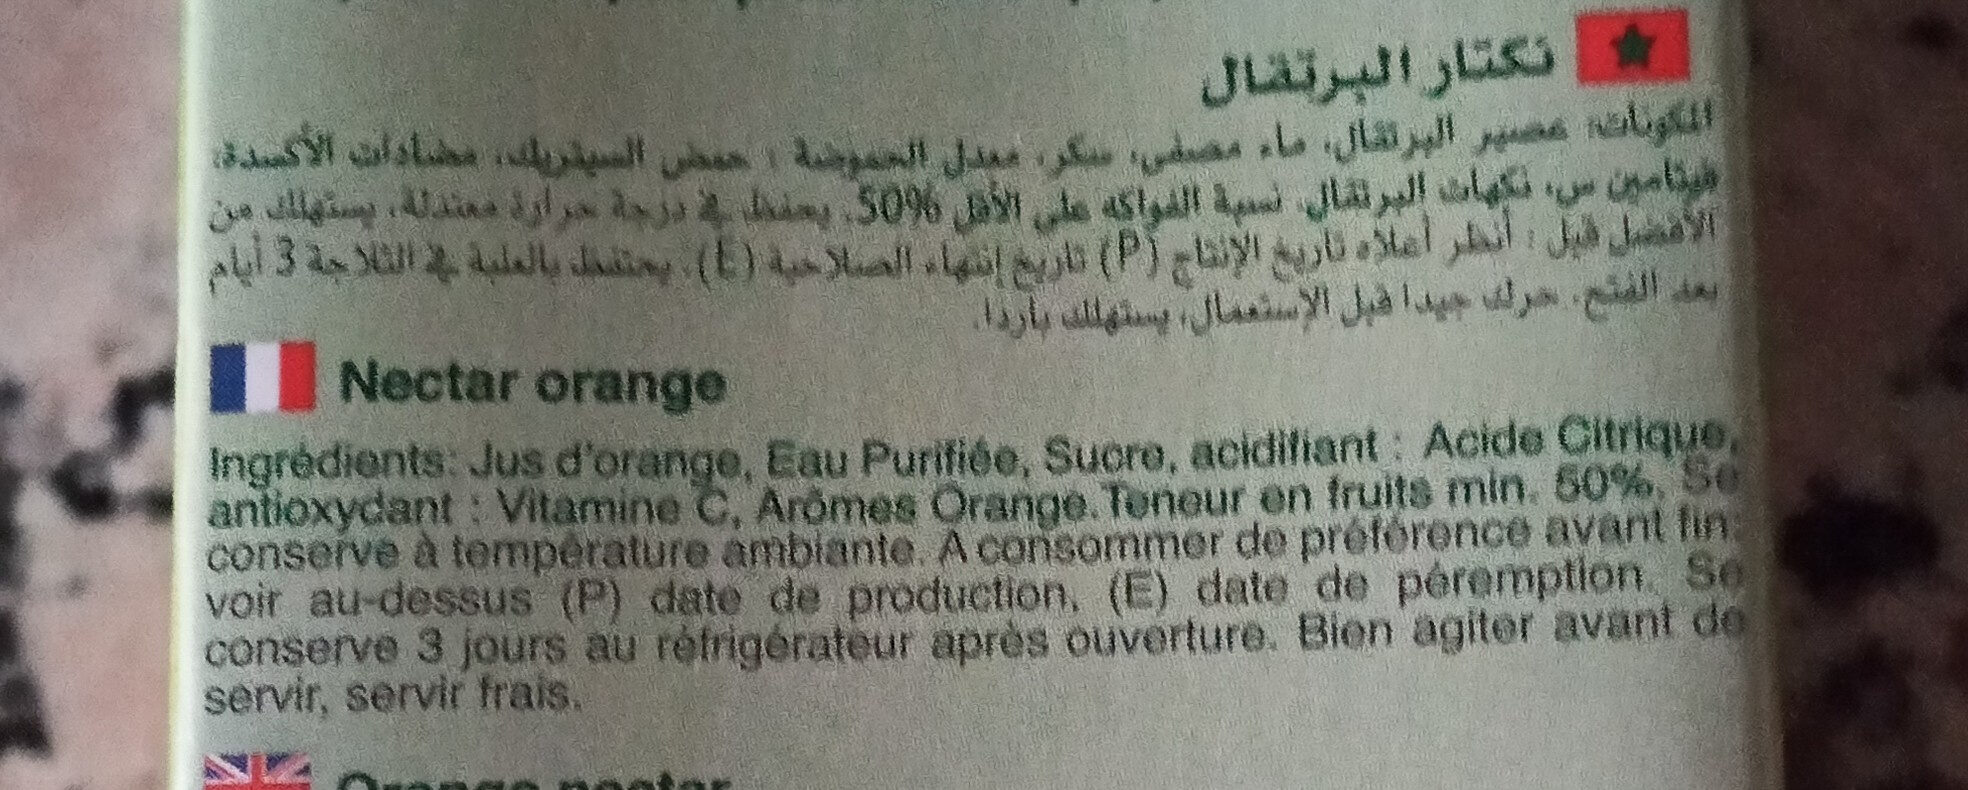 Nectar Orange - المكونات - fr